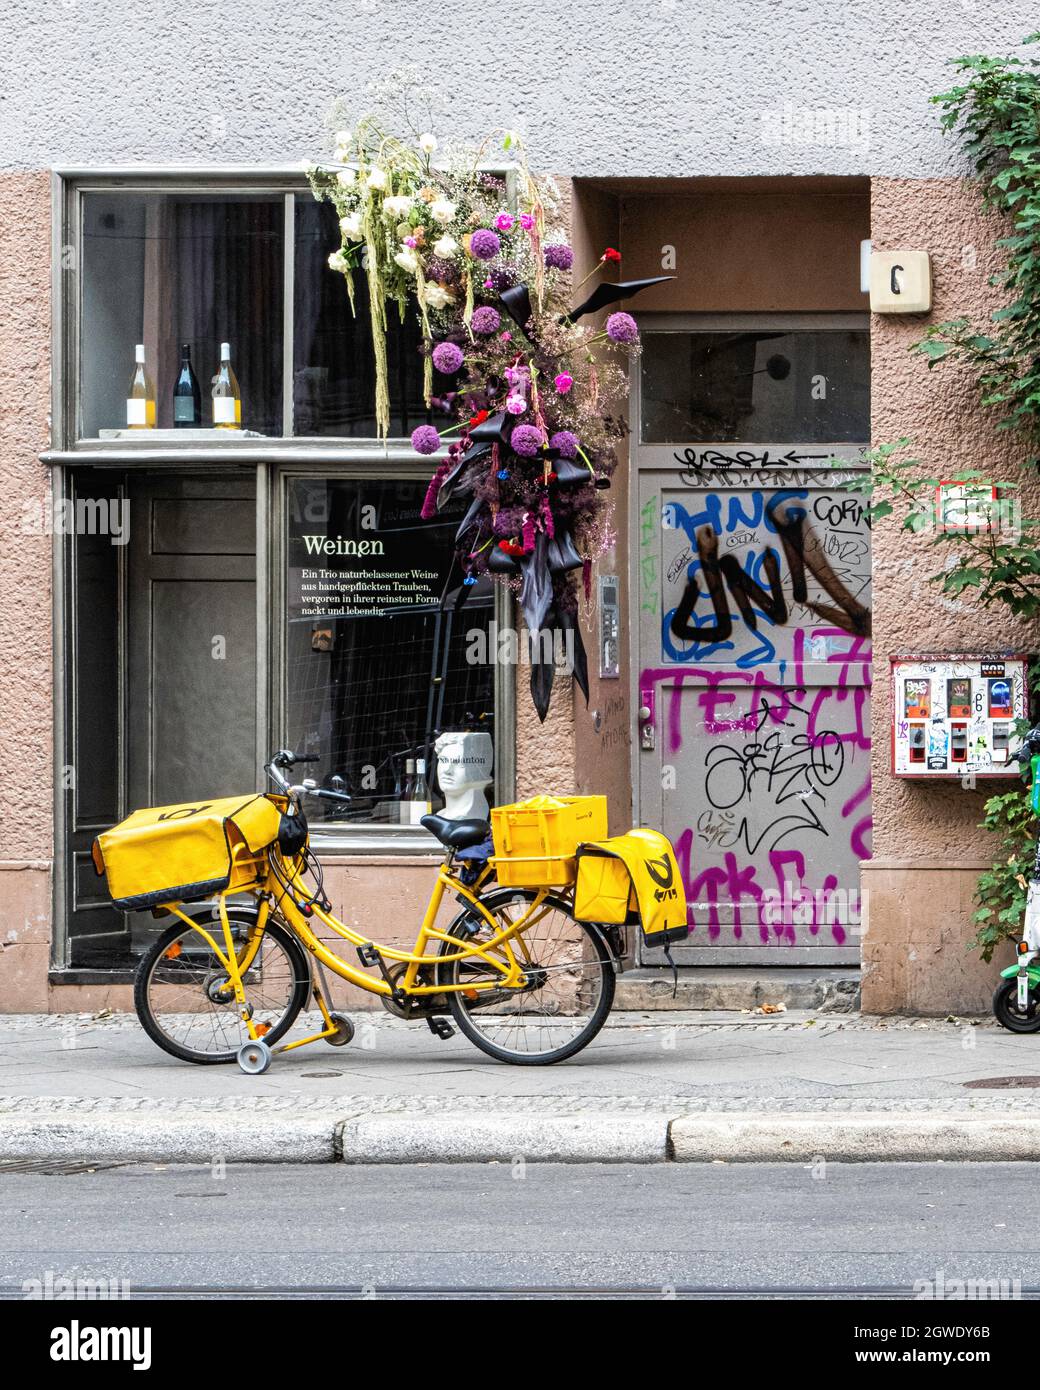 Weinen wine shop exterior and yellow Deutsche post bicycle parked outside, Brunnenstrasse 6, Mitte, Berlin, Germany Stock Photo